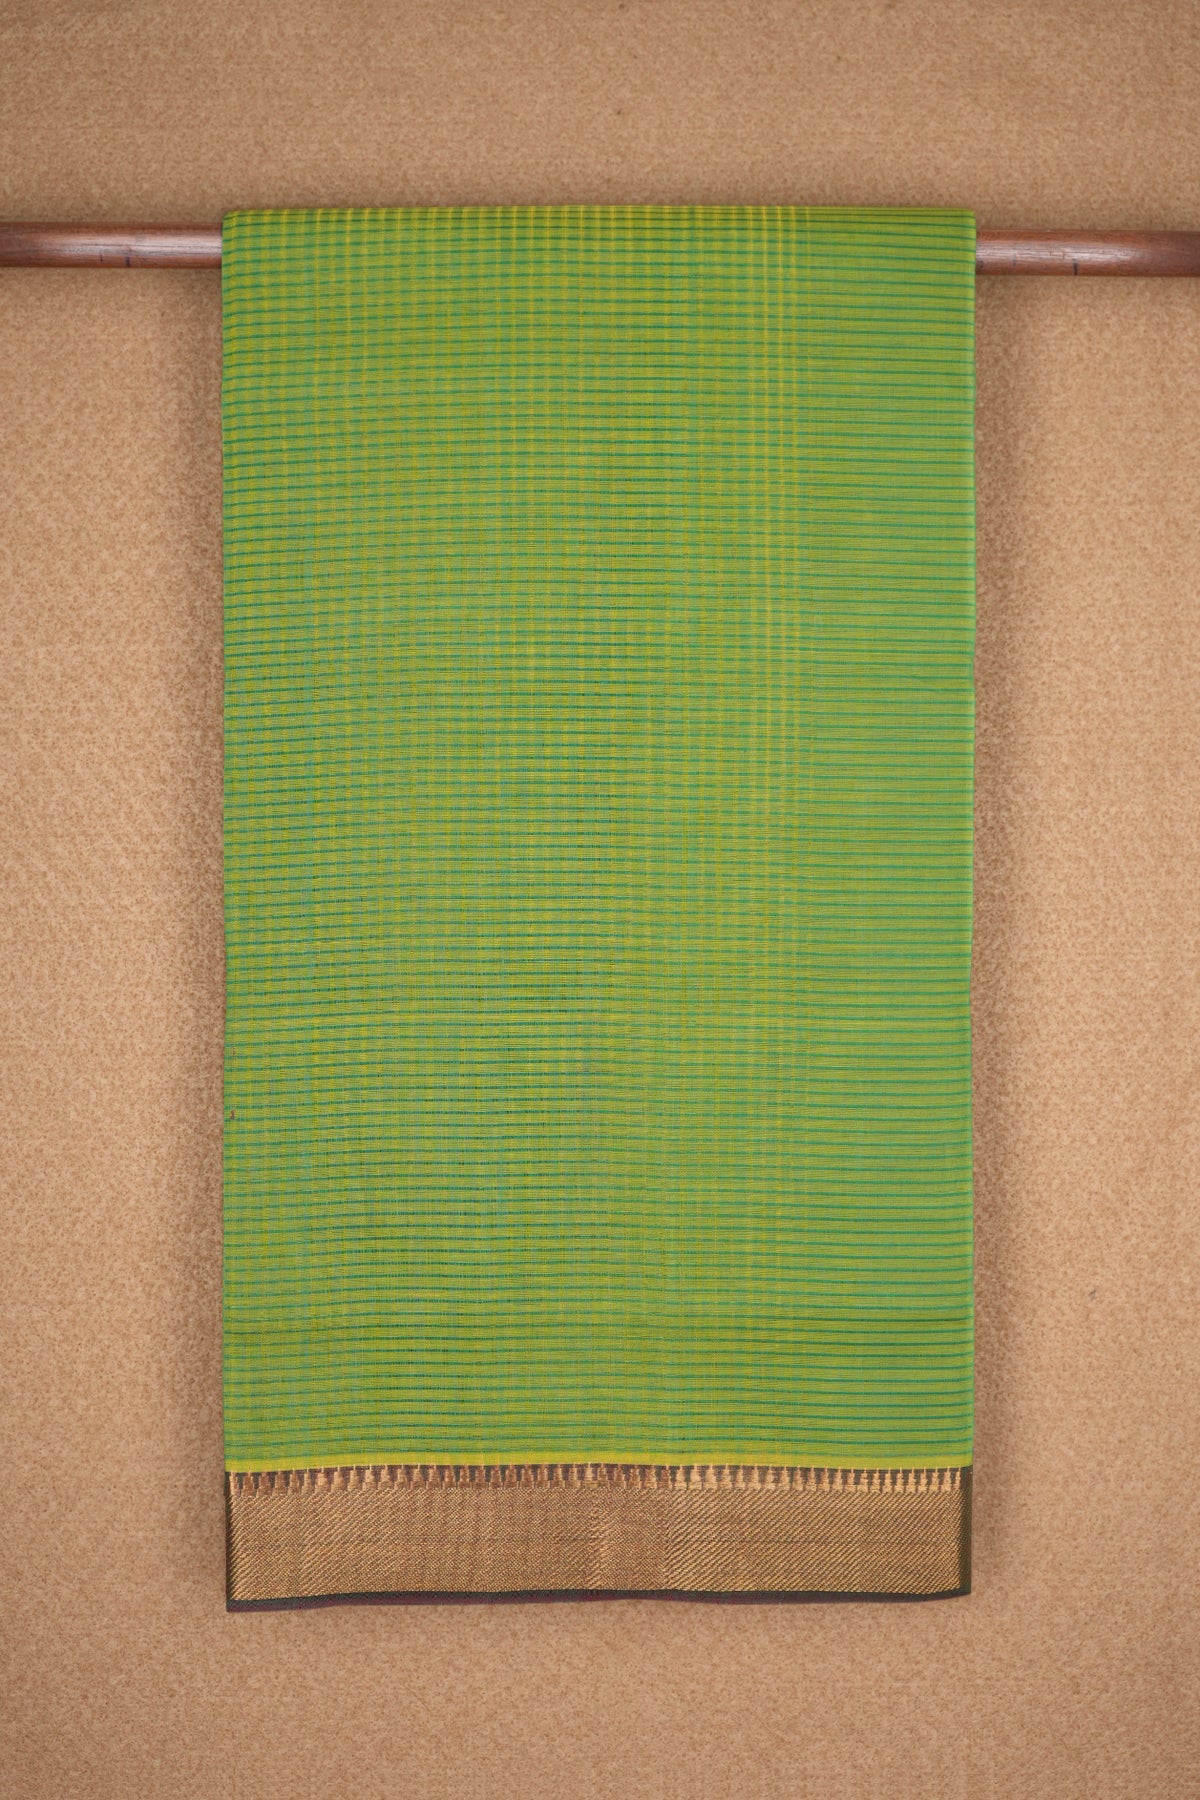 Twill Weave Zari Border Green  Mangalagiri Cotton Saree